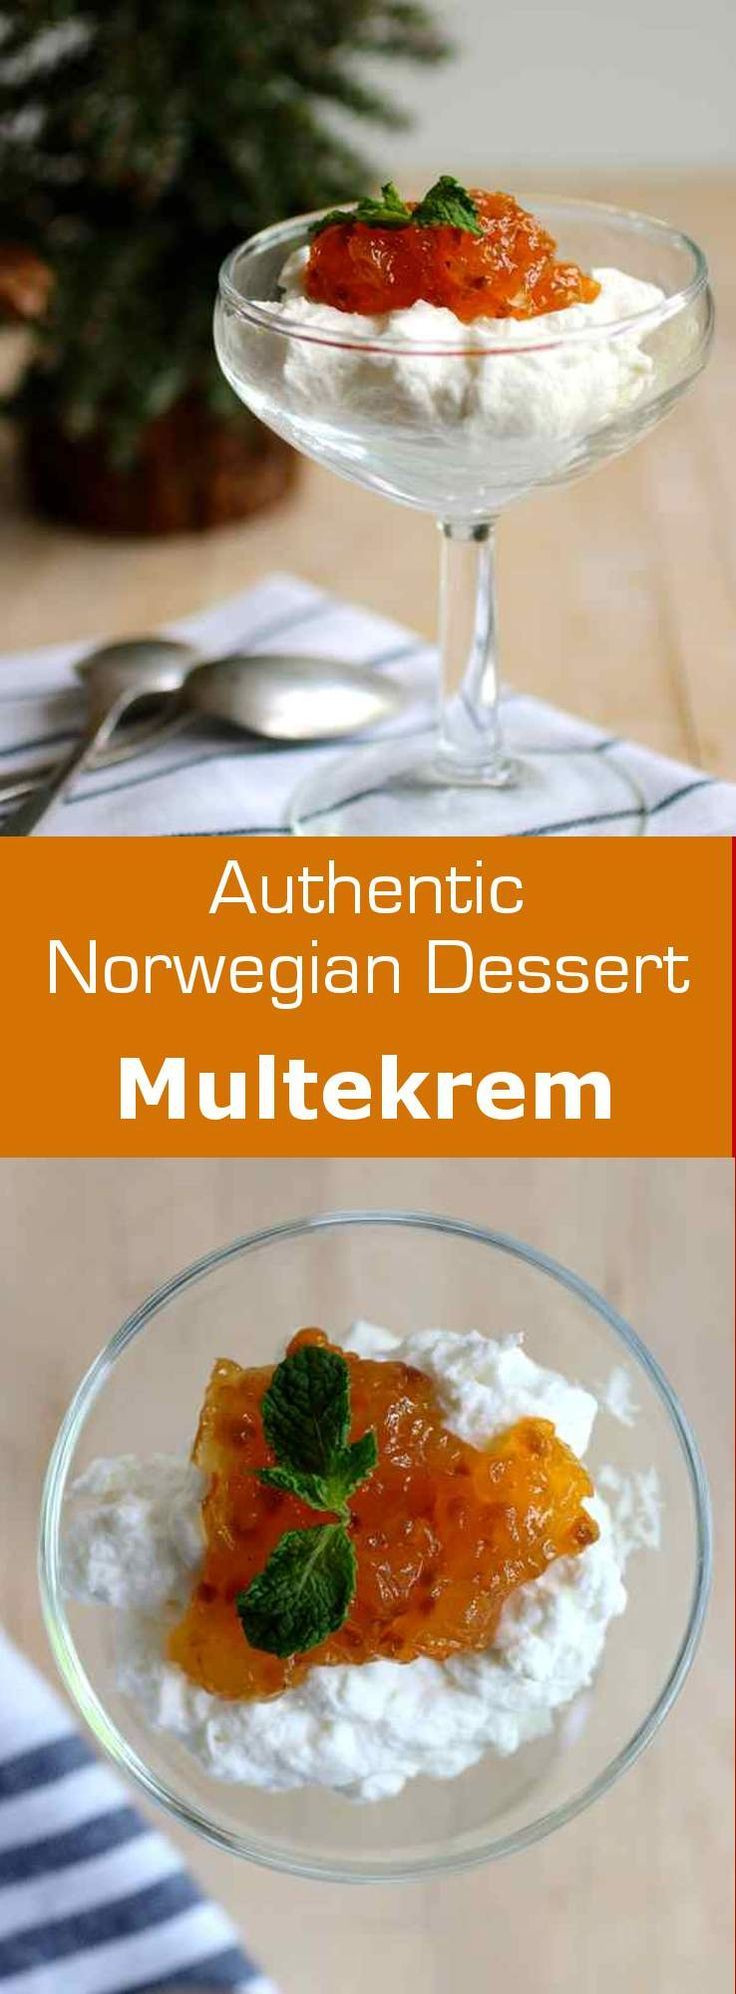 Norwegian Christmas Desserts
 Best 25 Norwegian recipes ideas on Pinterest